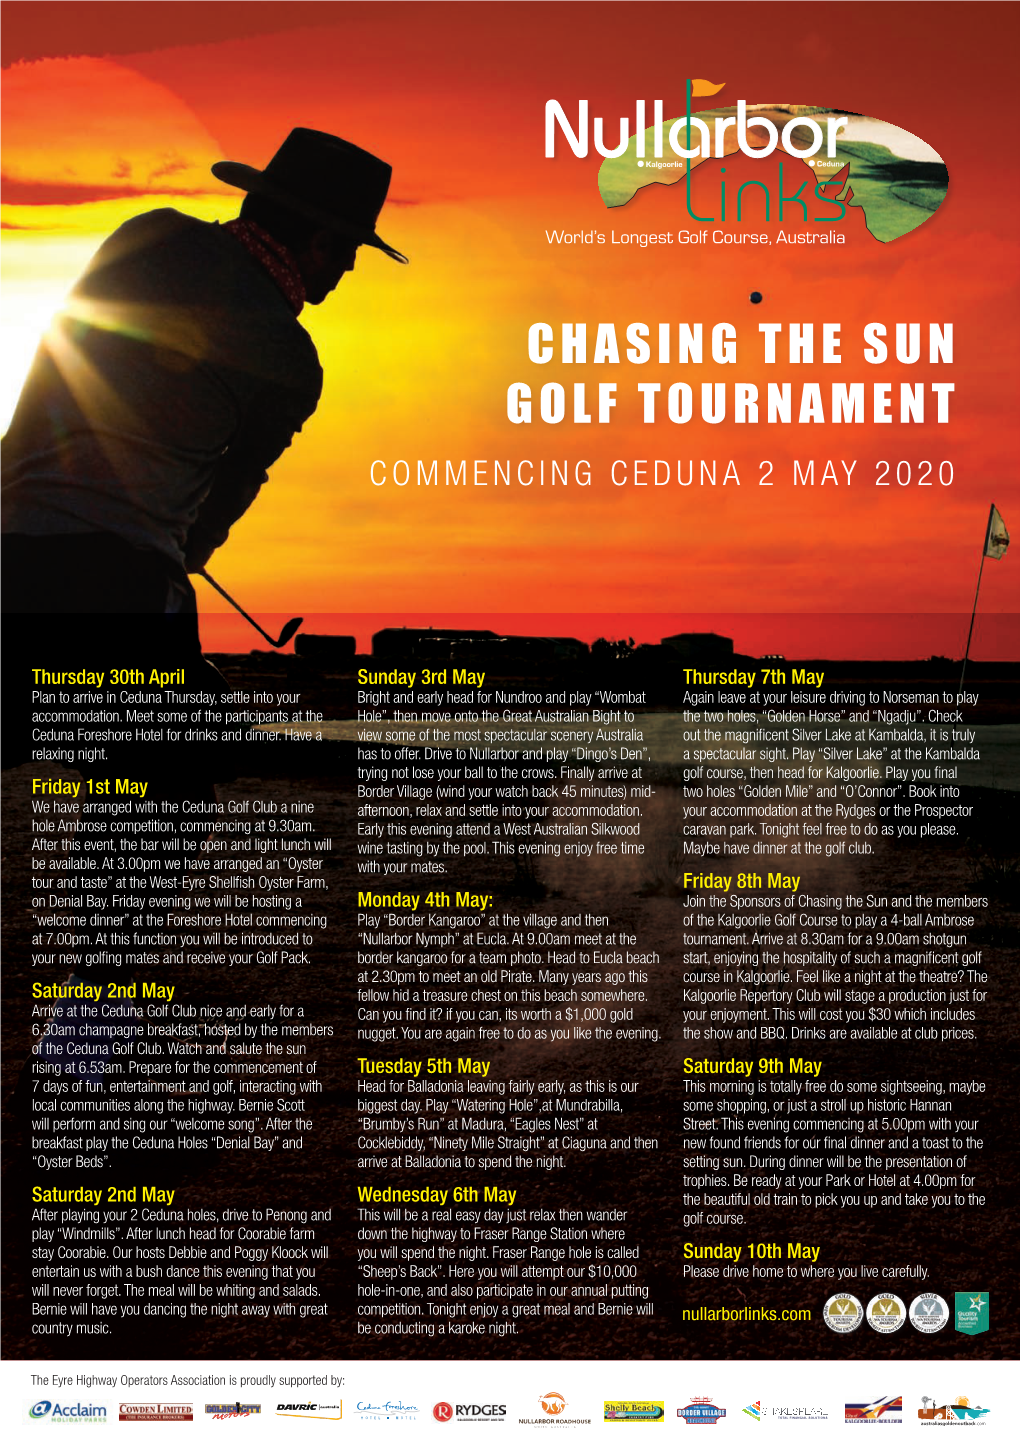 Chasing the Sun Golf Tournament